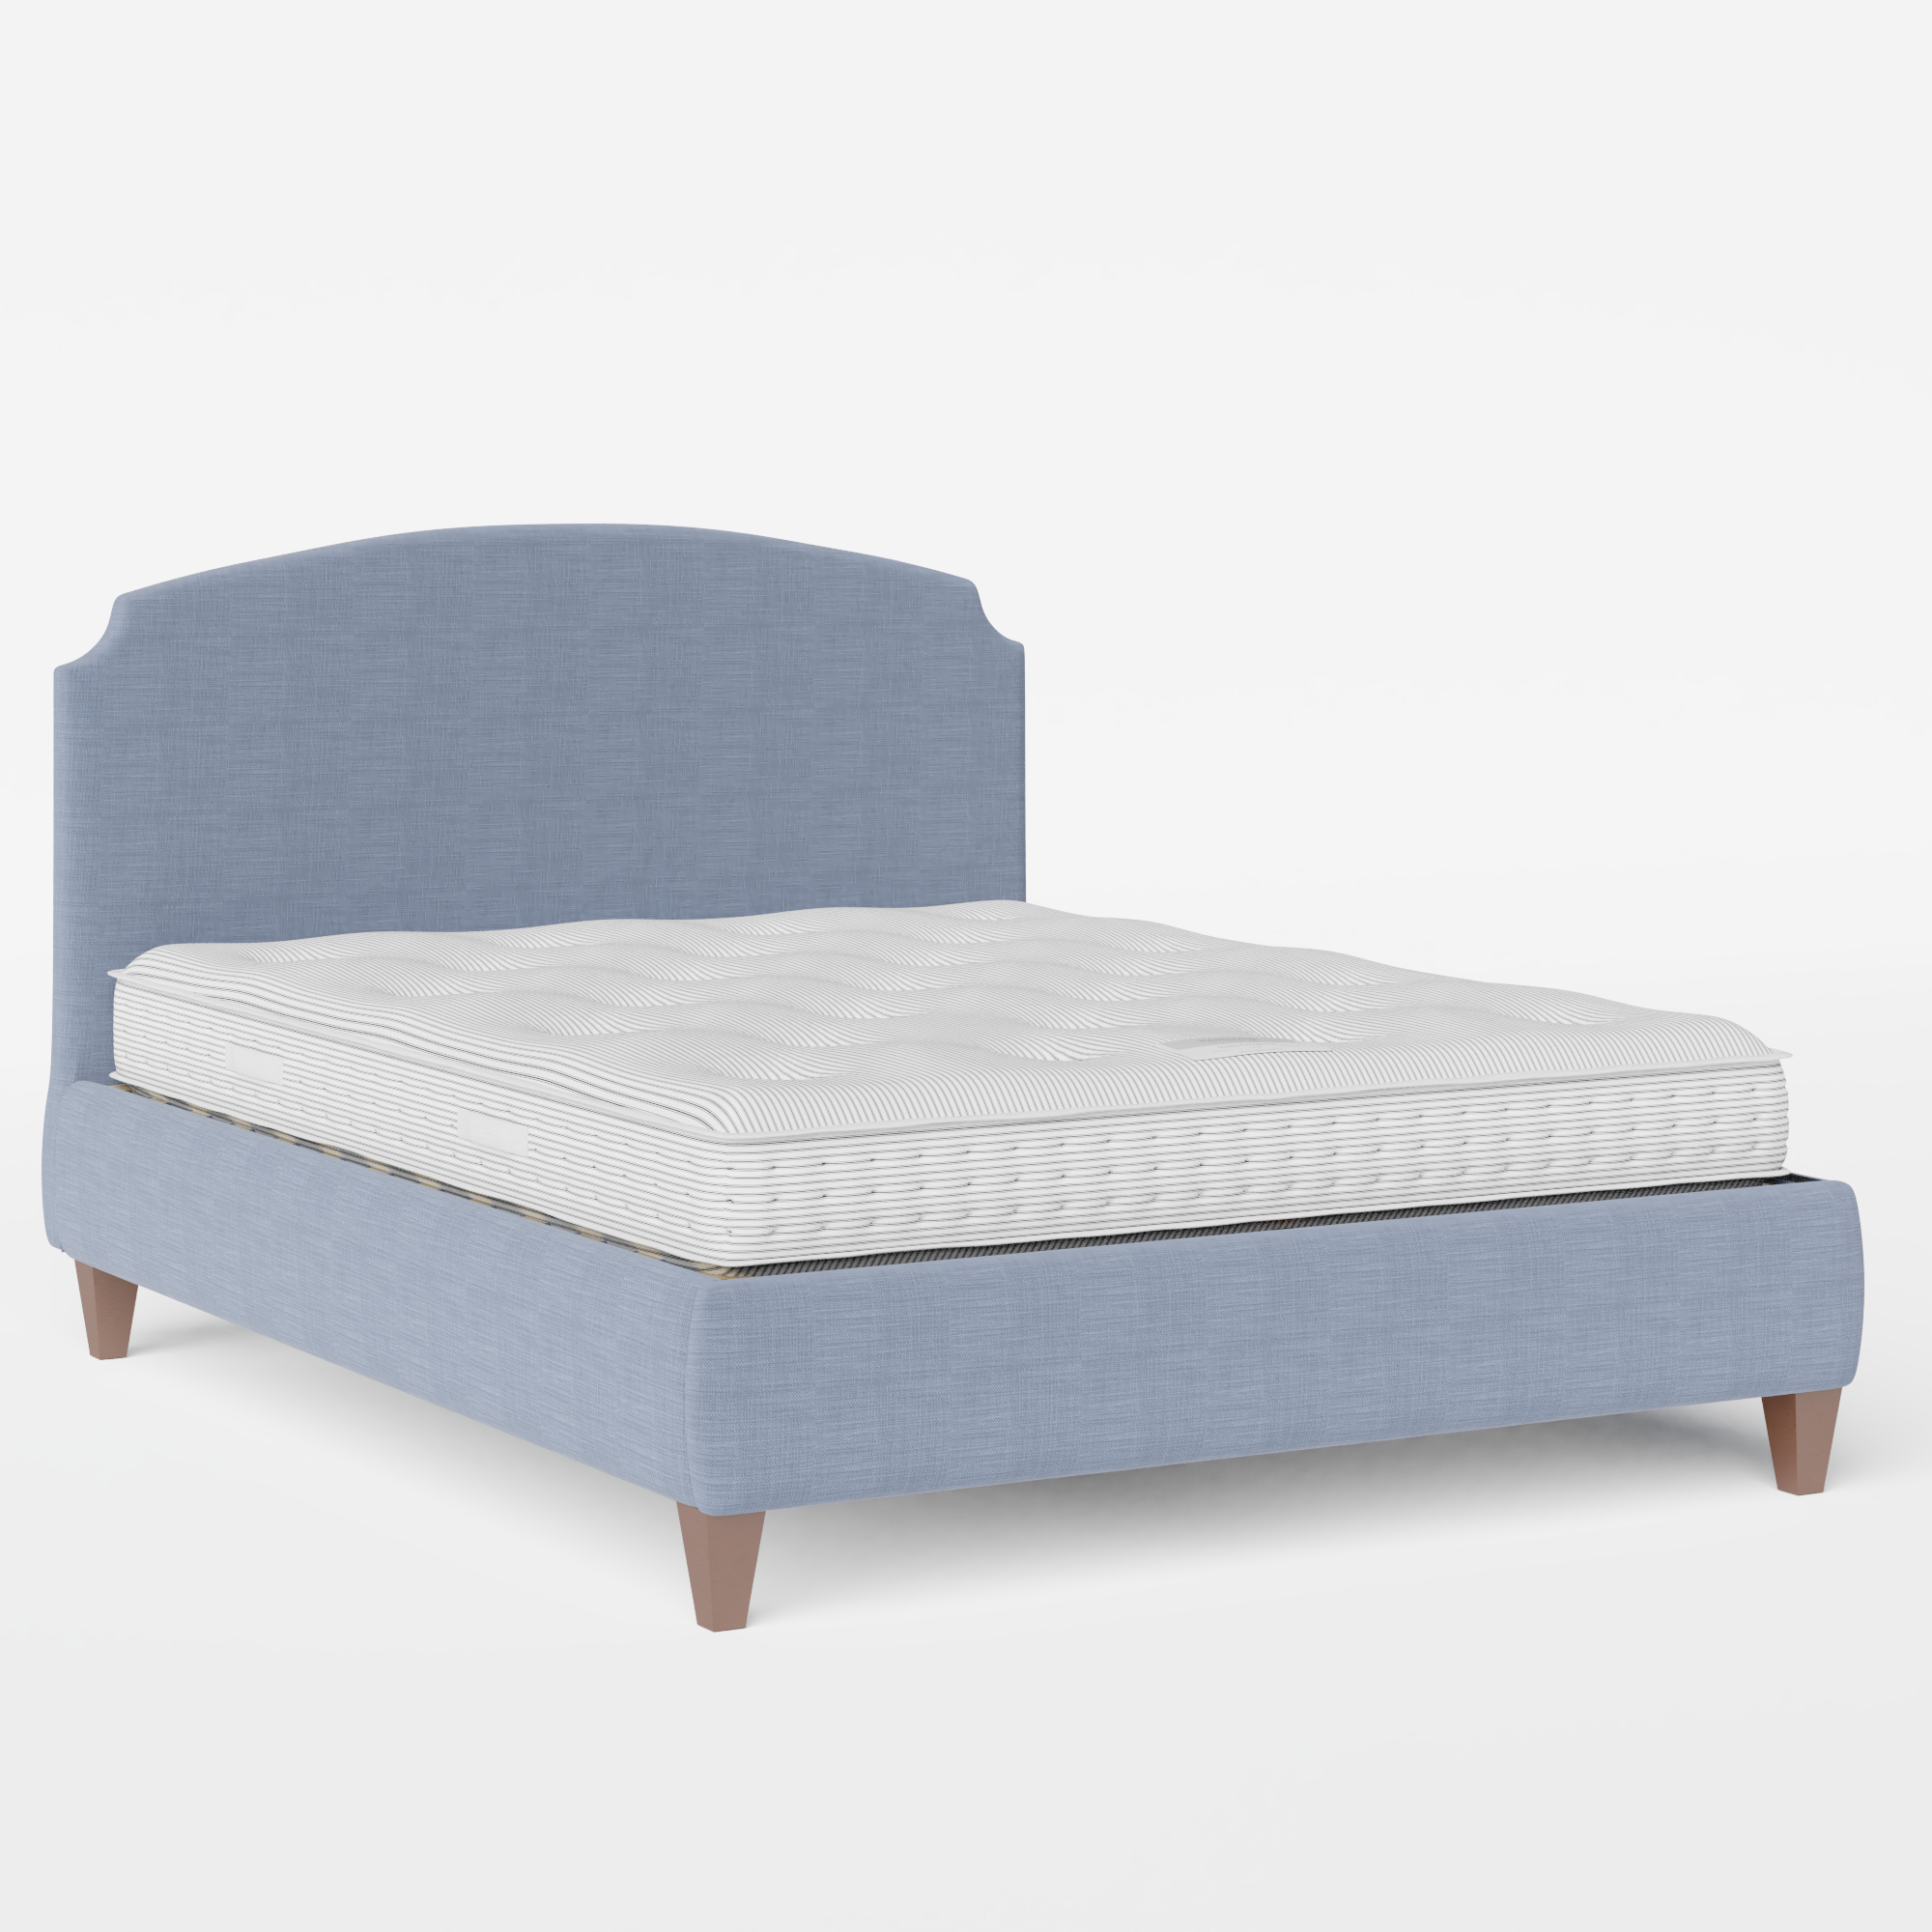 Lide cama tapizada en tela azul